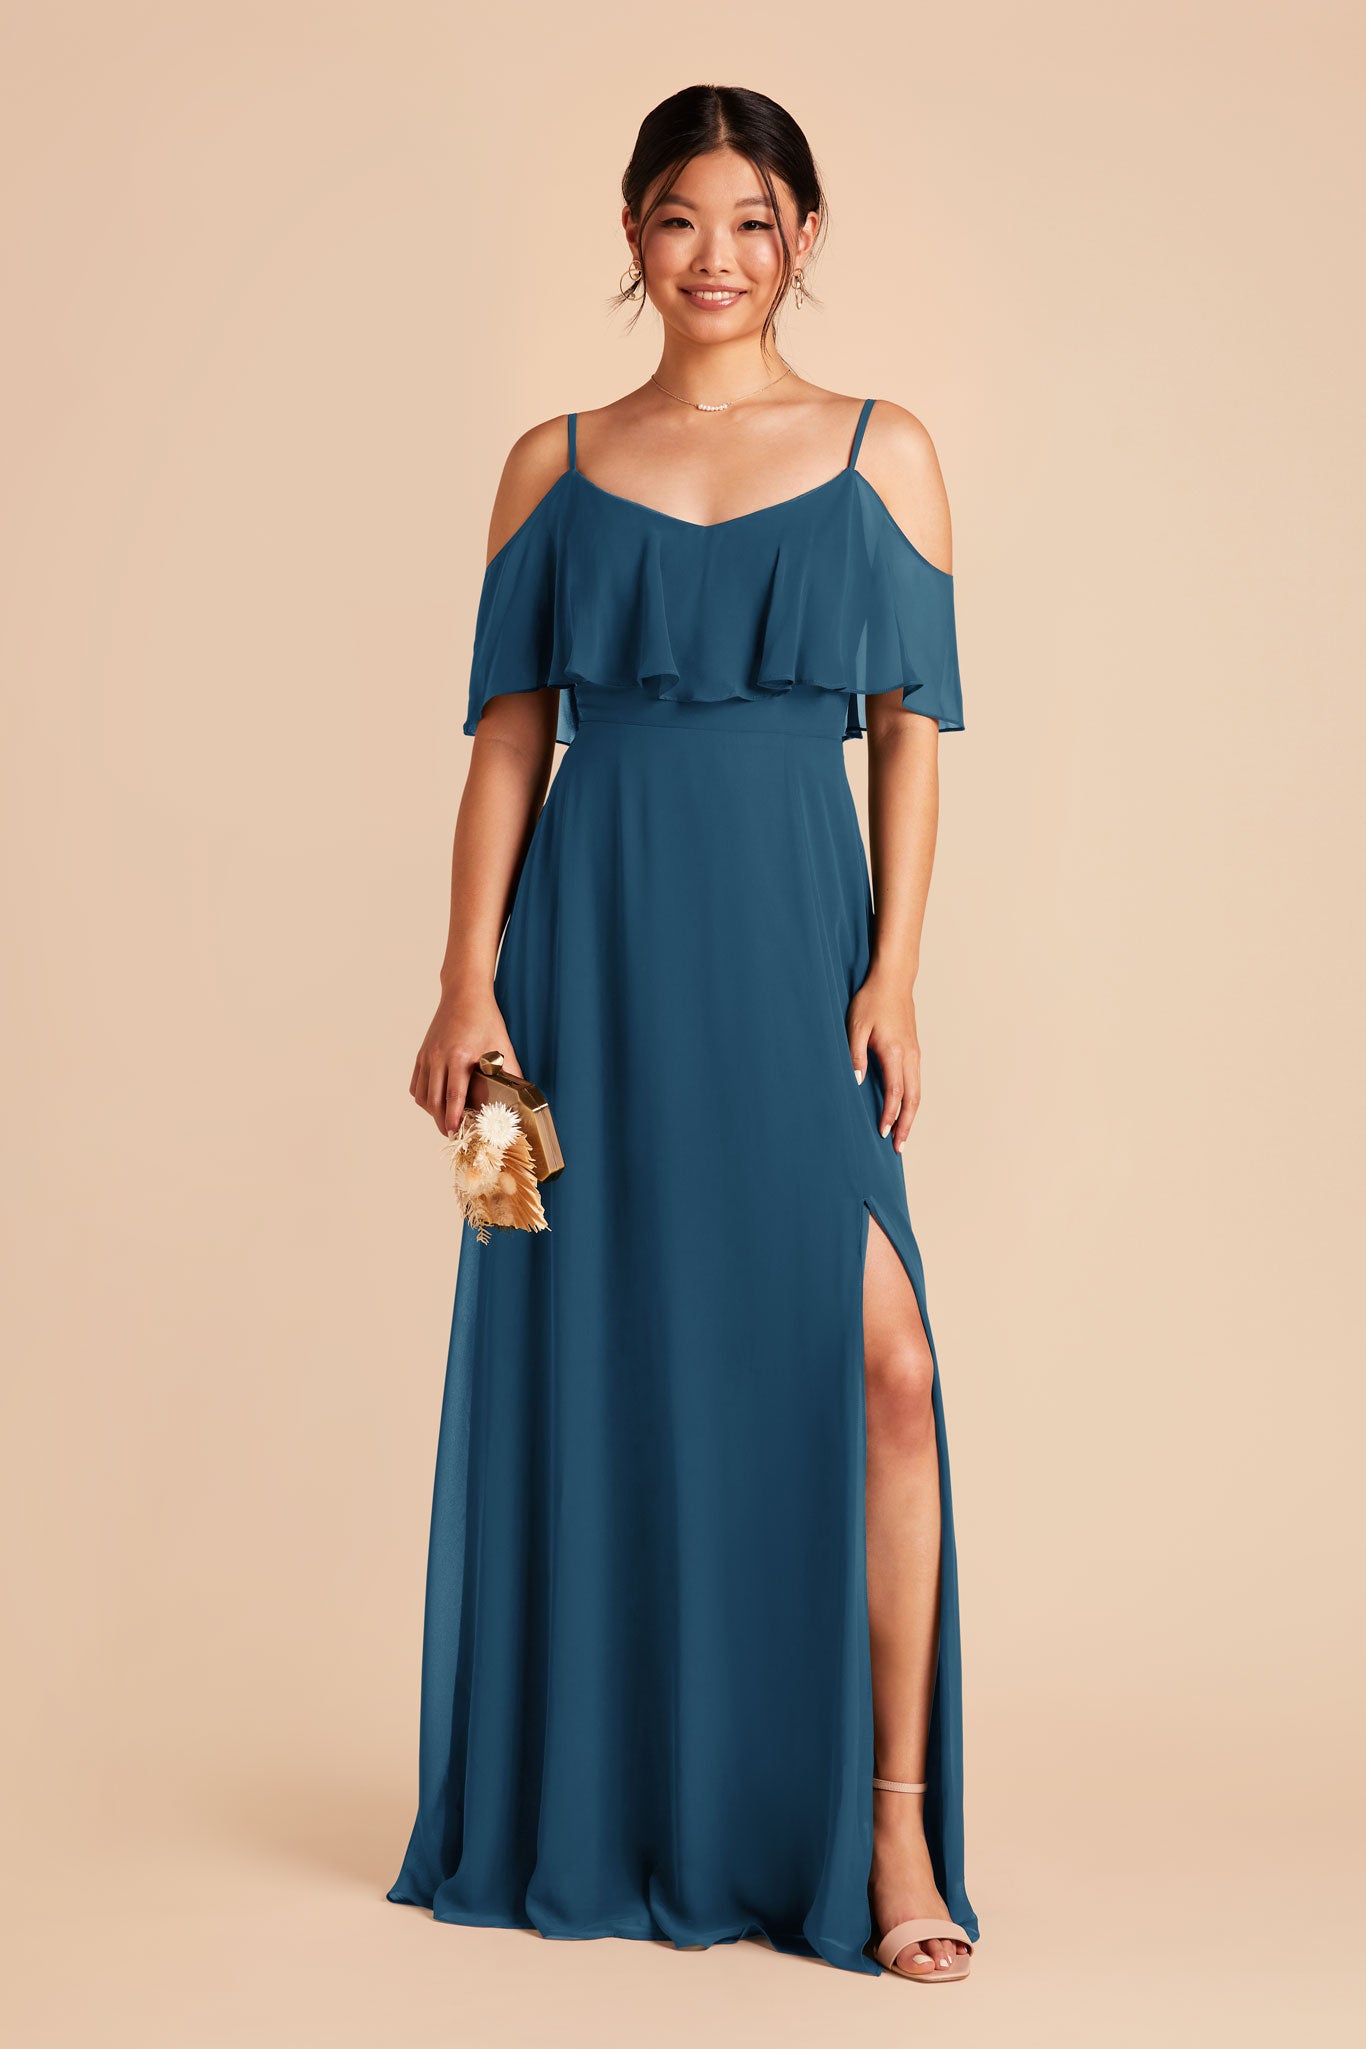 Ocean Blue Jane Convertible Dress by Birdy Grey